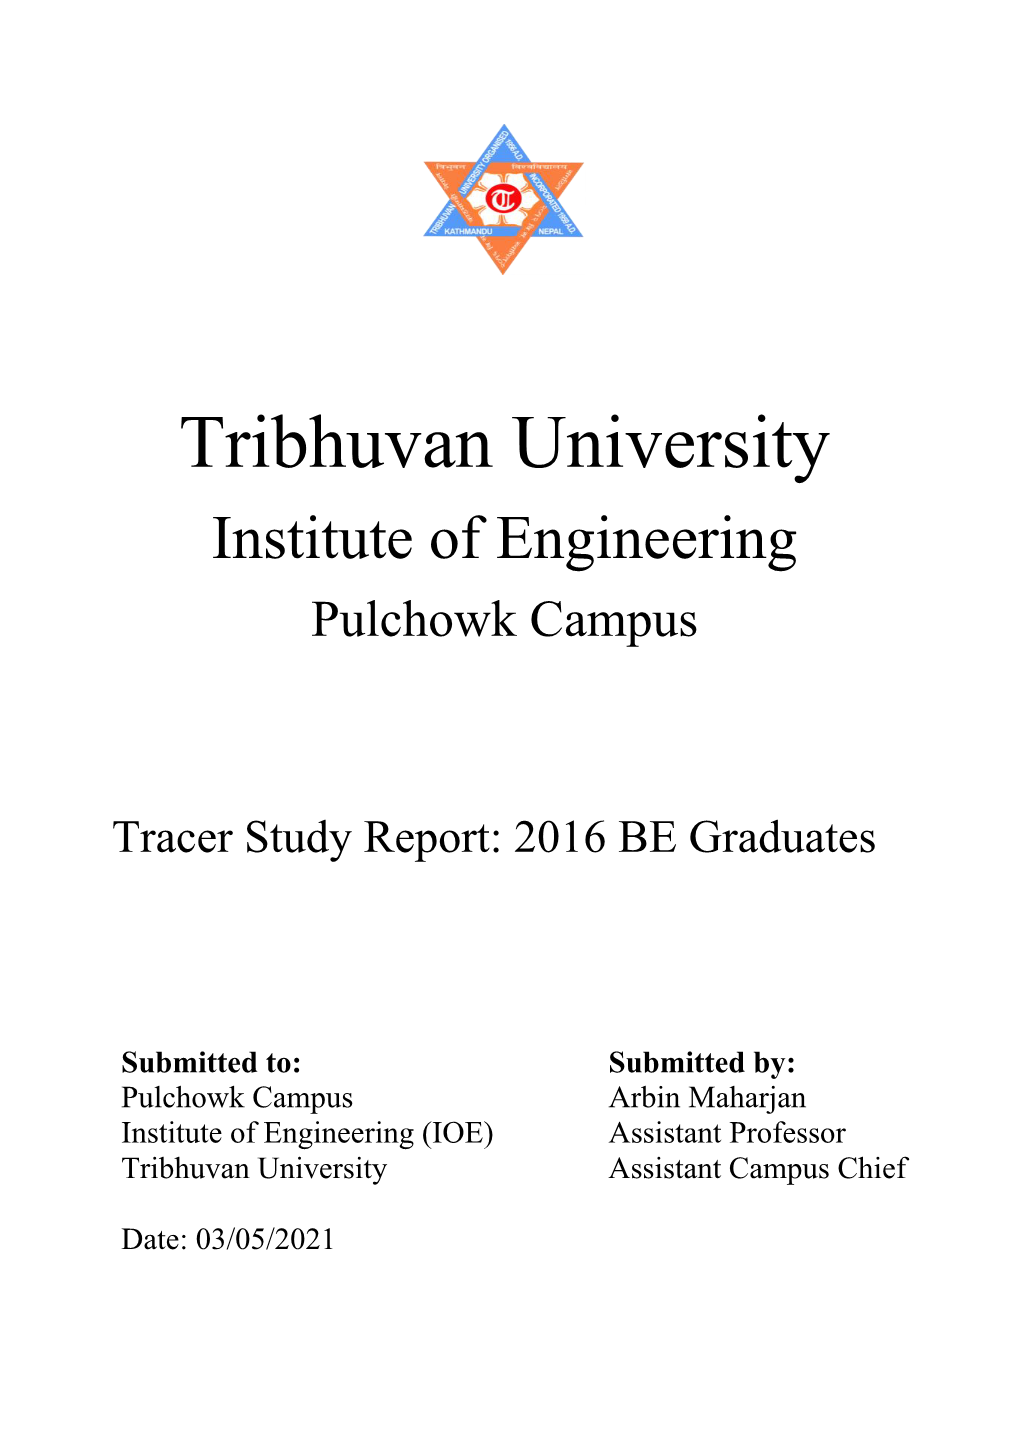 Tribhuvan University Institute of Engineering Pulchowk Campus